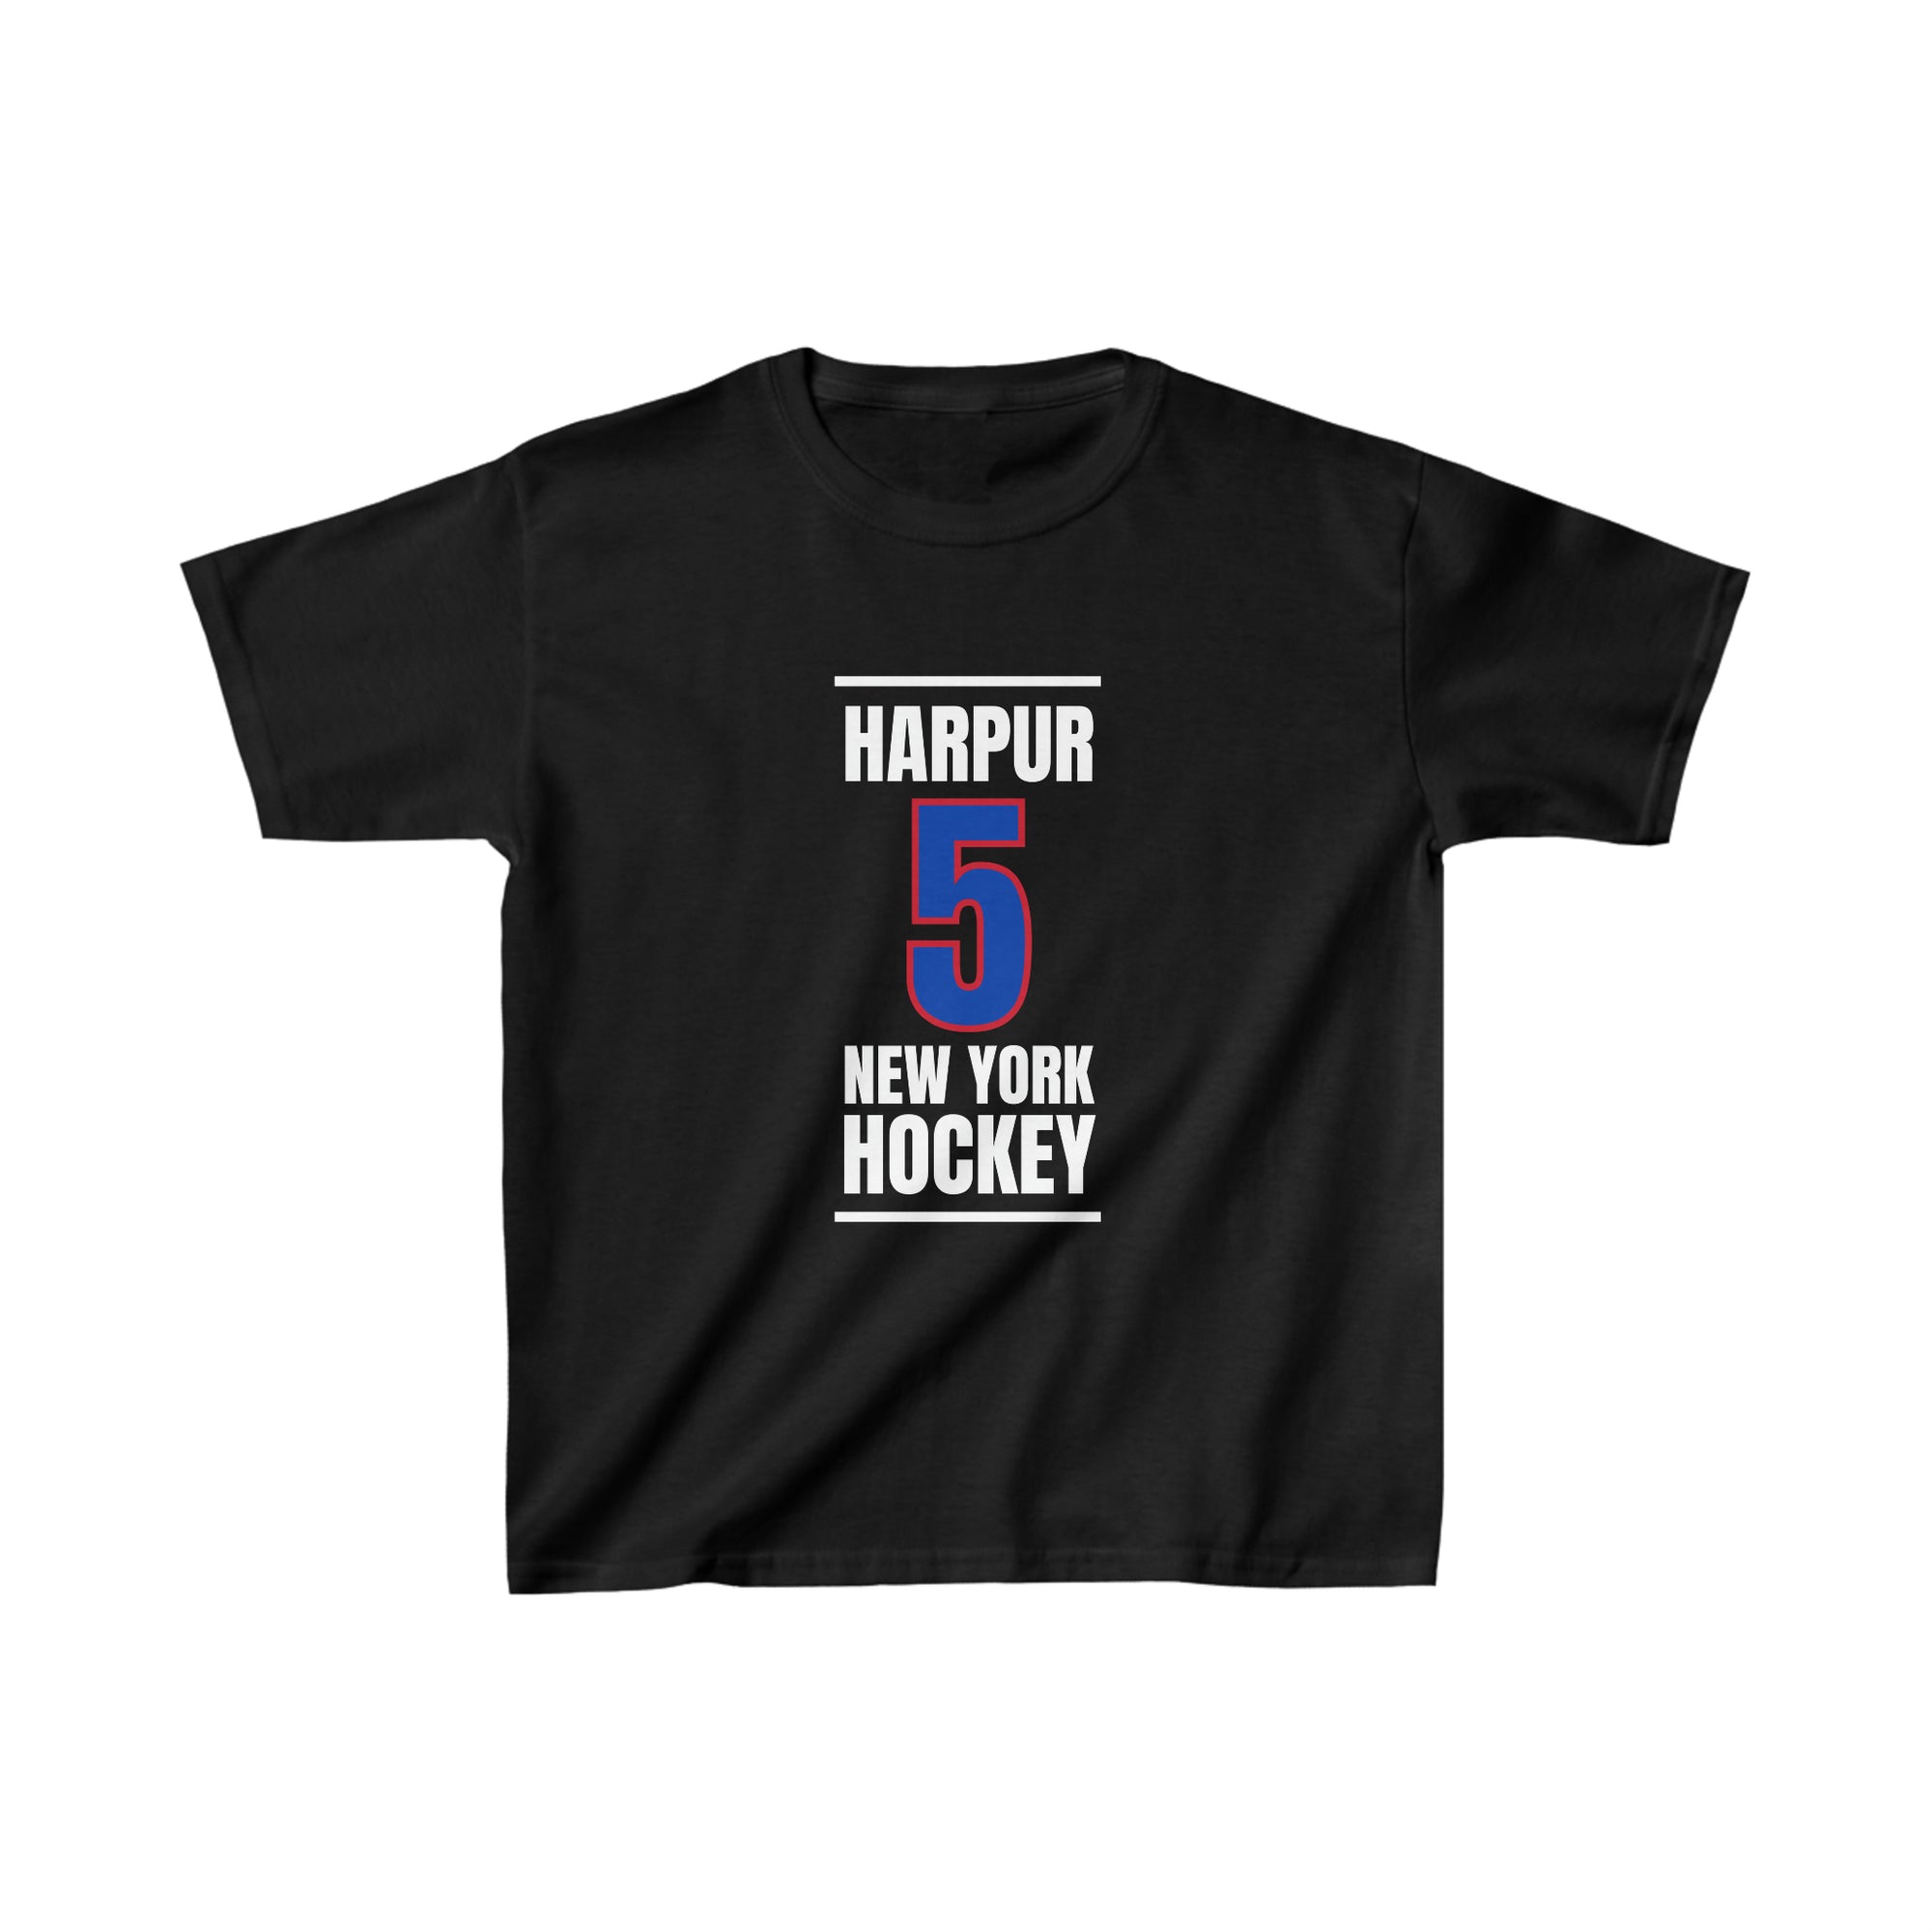 Harpur 5 New York Hockey Royal Blue Vertical Design Kids Tee